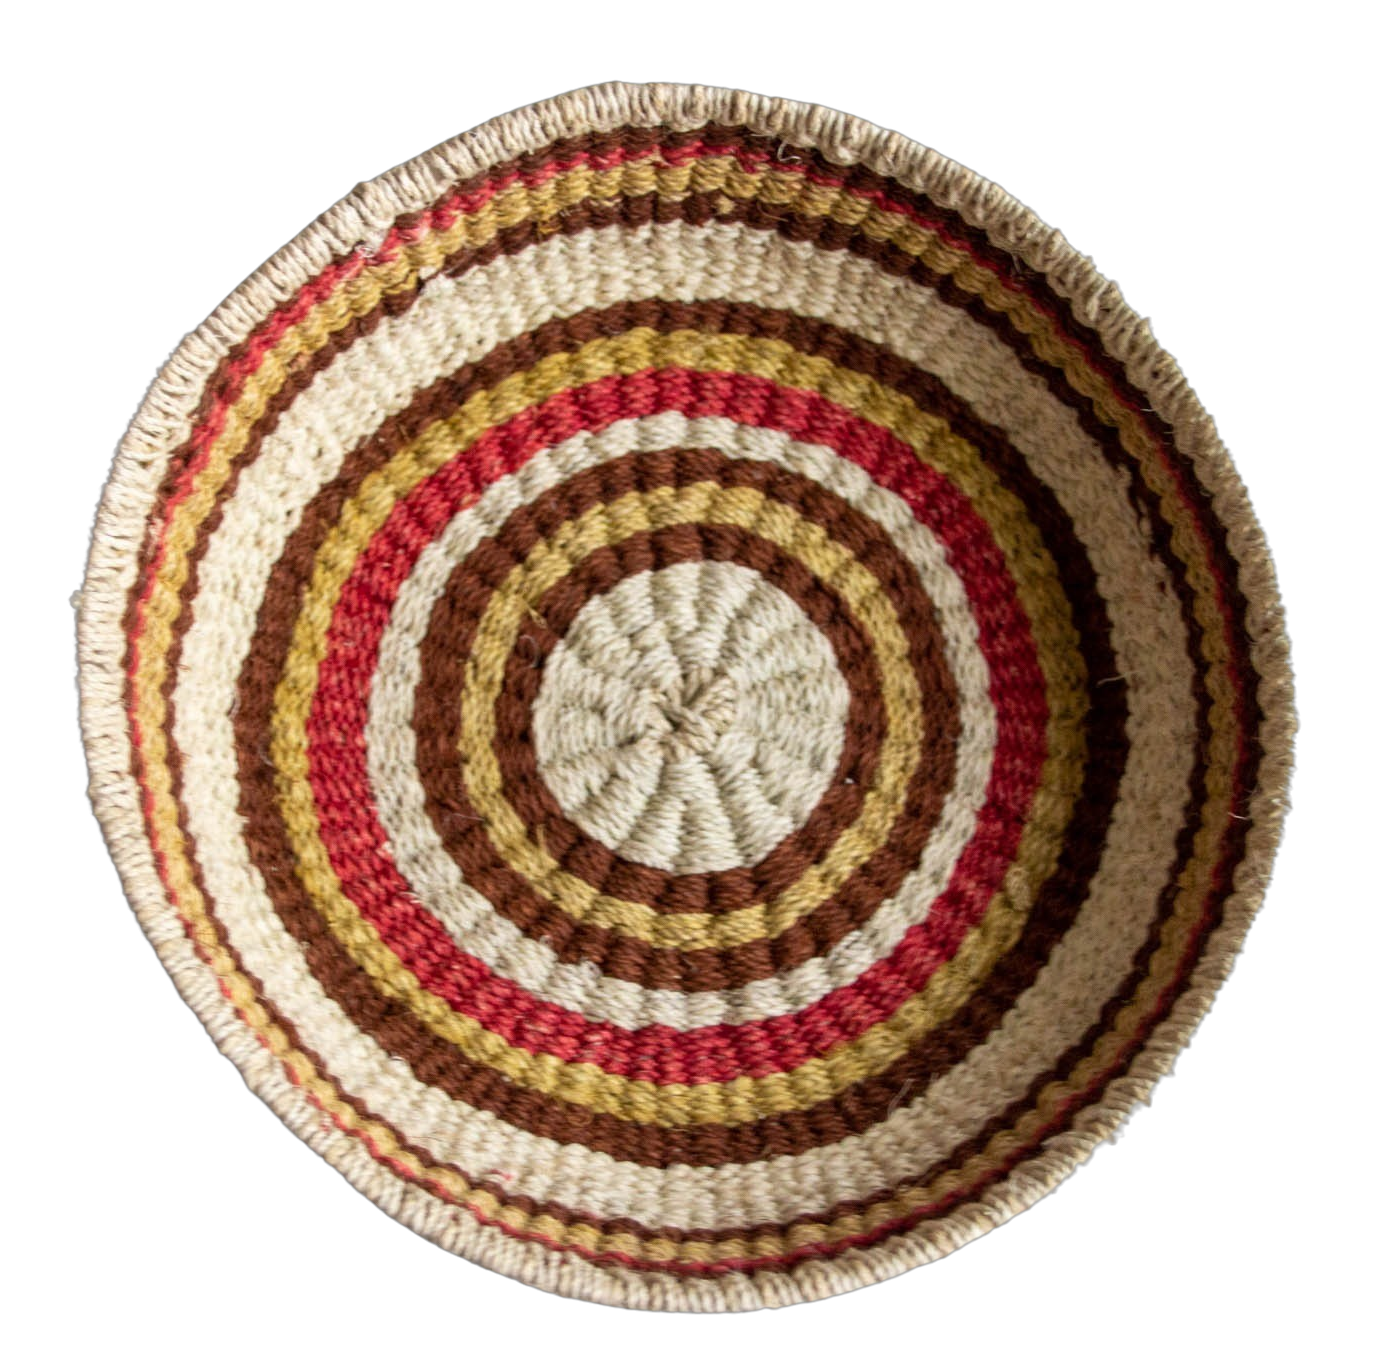 Wichi Pink and brown chaguar fiber basket